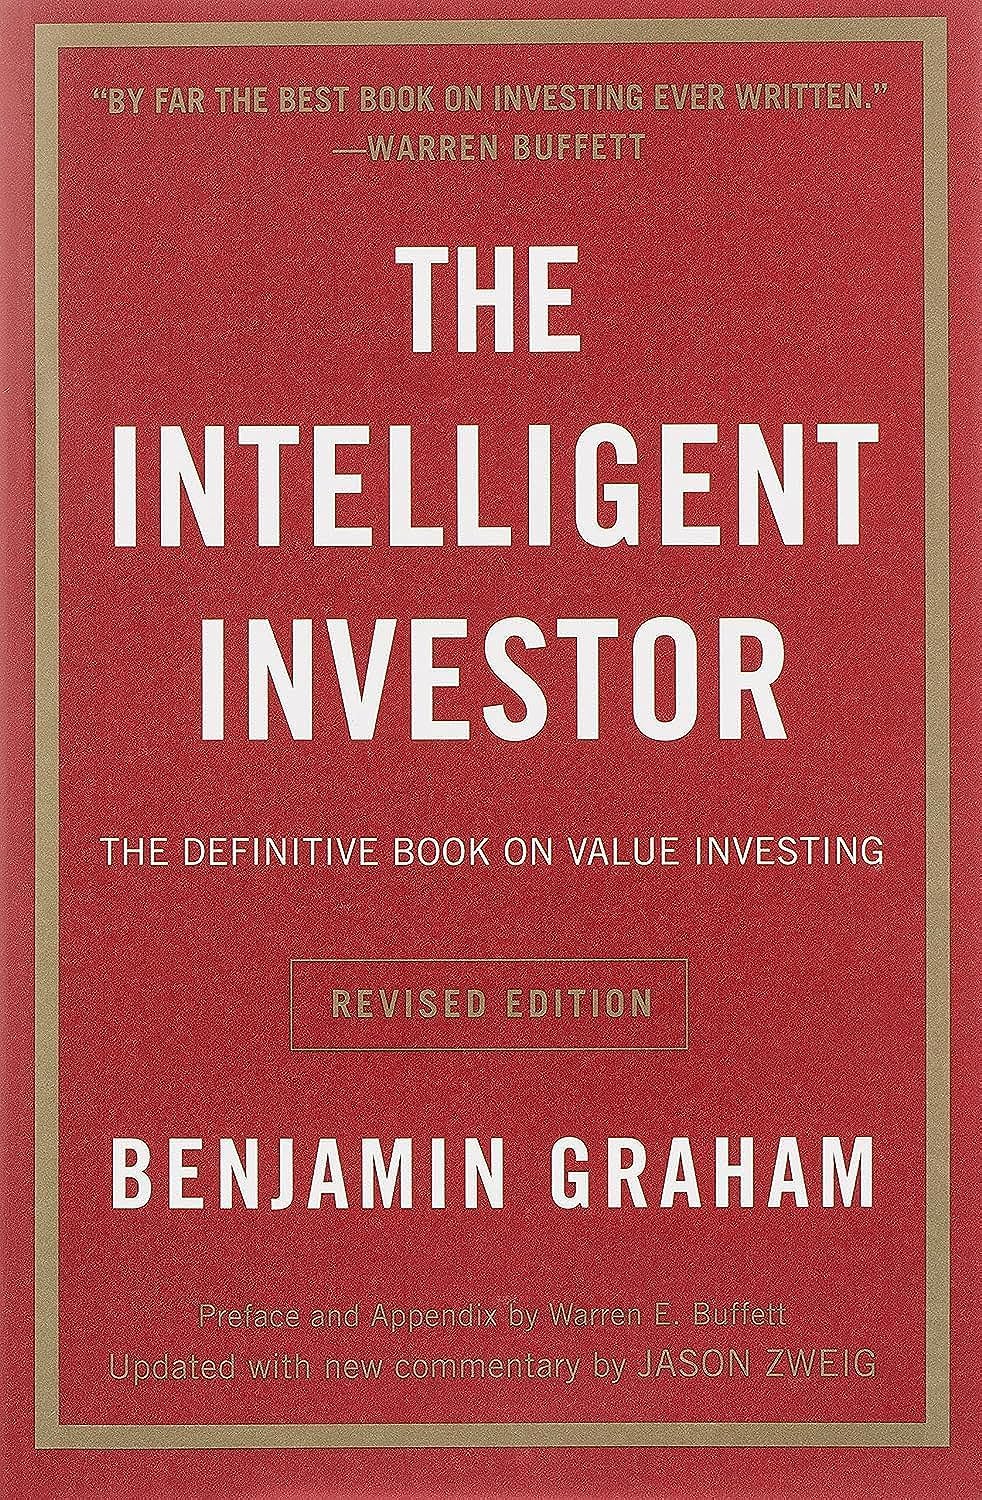 The Intelligent Investor Rev Ed By Benjamin Graham